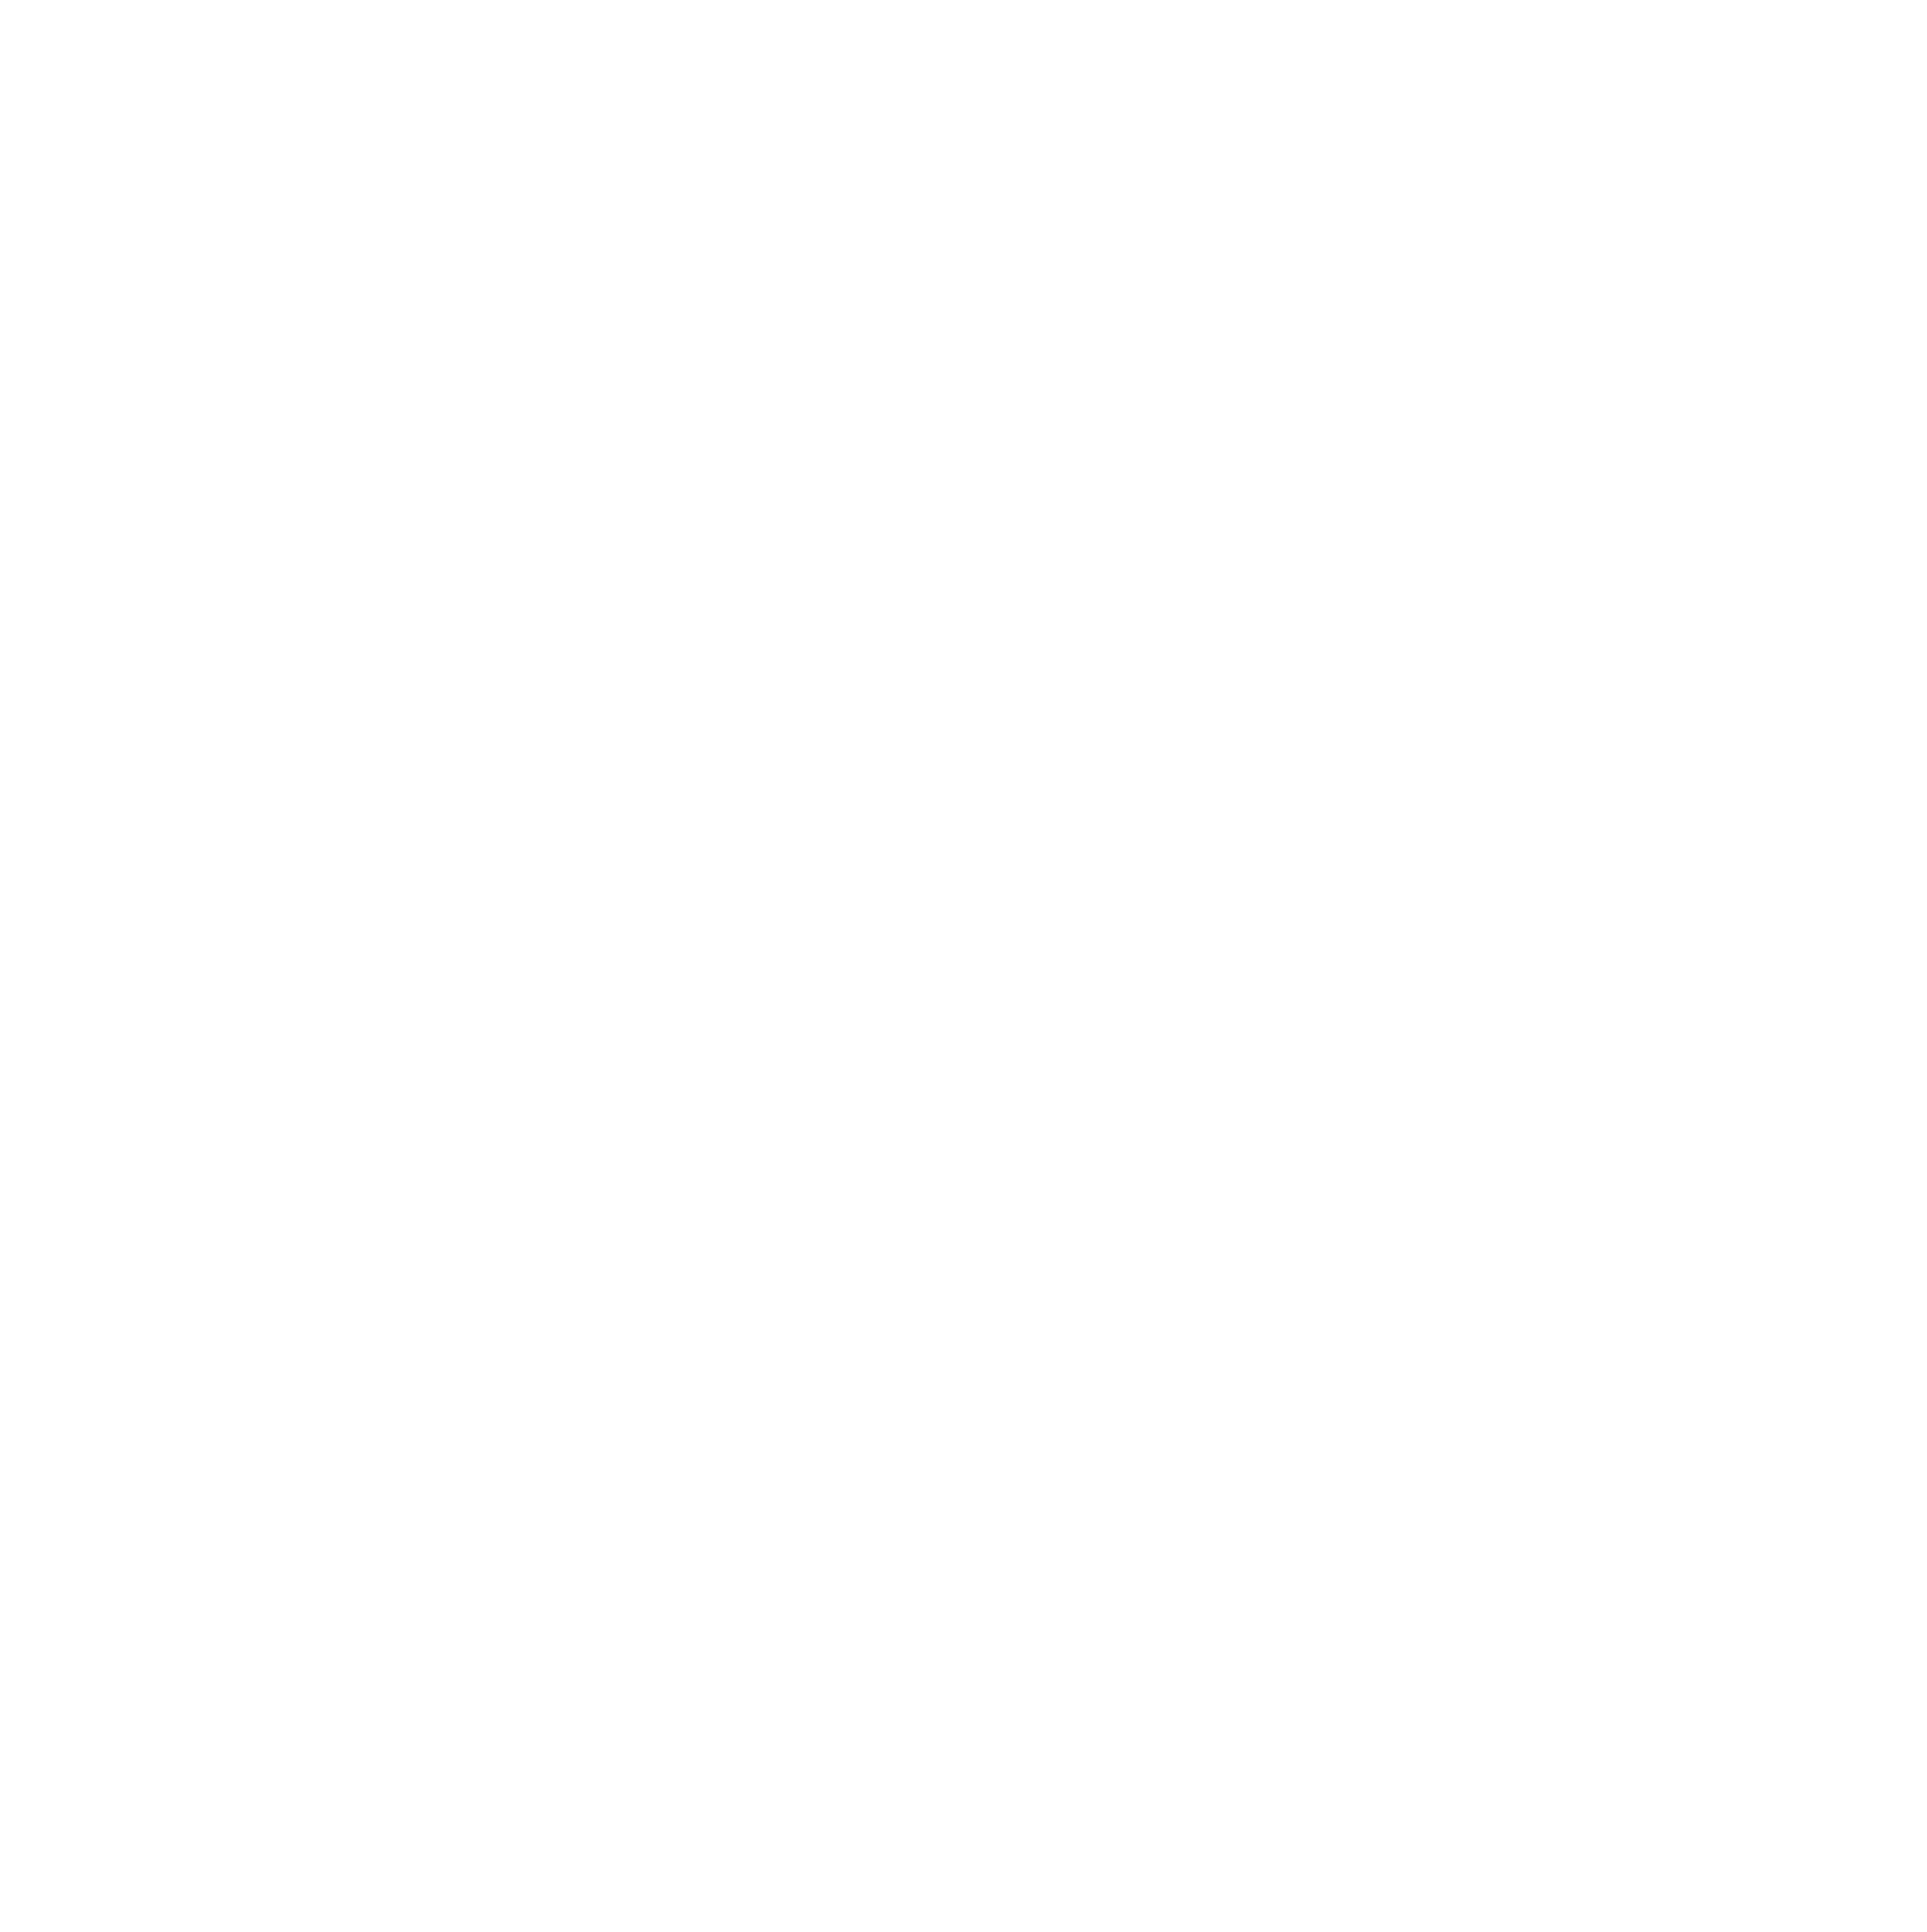 City of Kirkland wh T.png